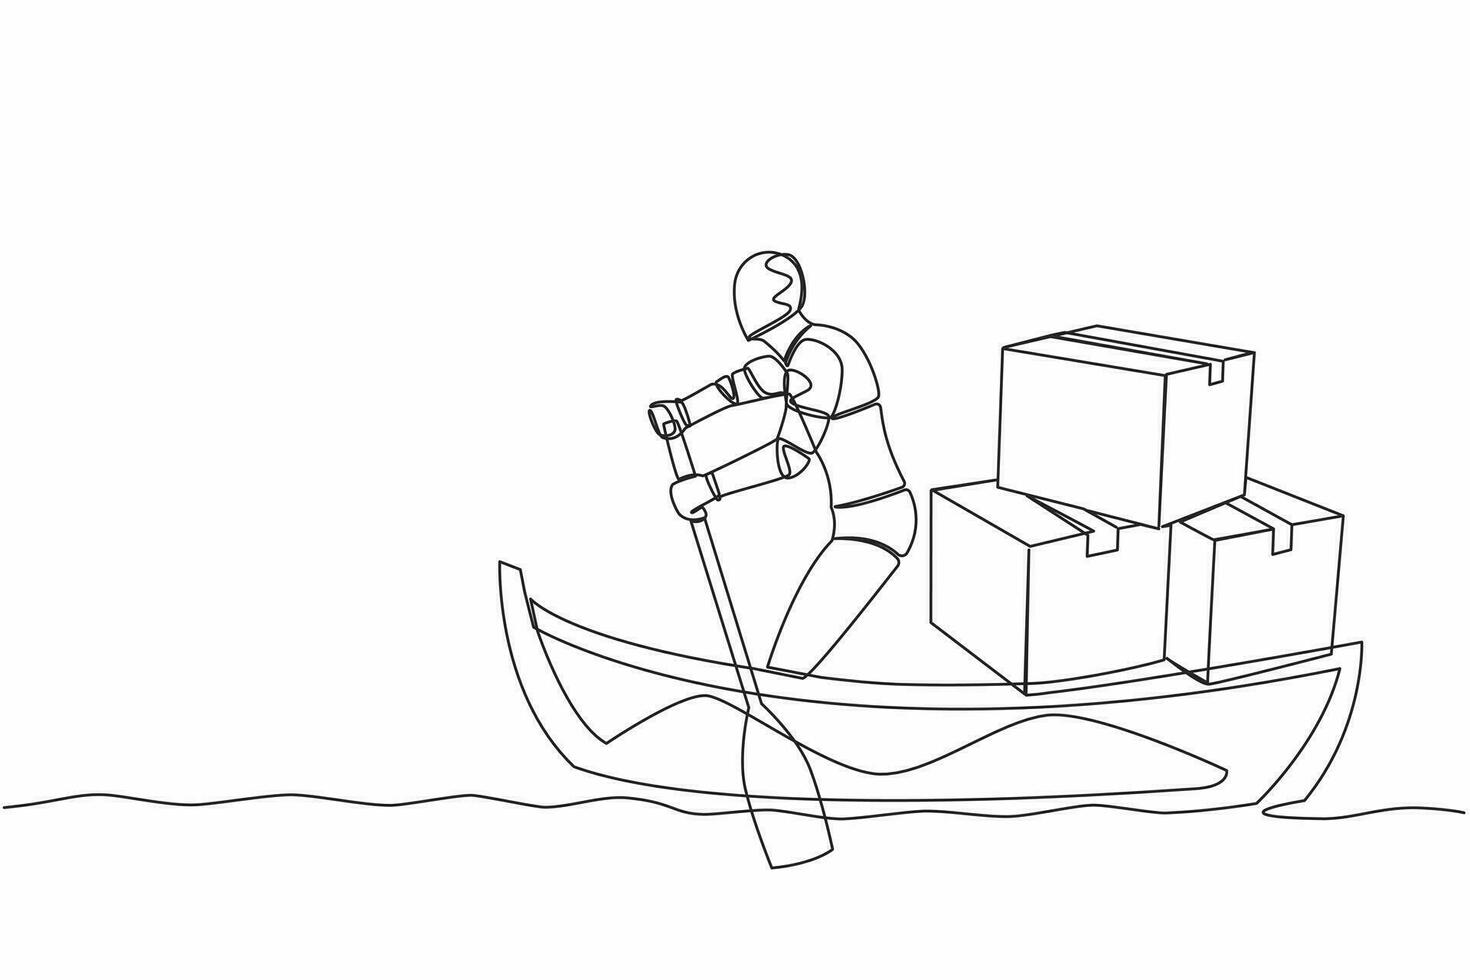 continuo uno línea dibujo de robot navegación lejos en barco con pila de cartulina. Oceano Envío transporte. humanoide robot cibernético organismo. soltero línea dibujar diseño vector gráfico ilustración